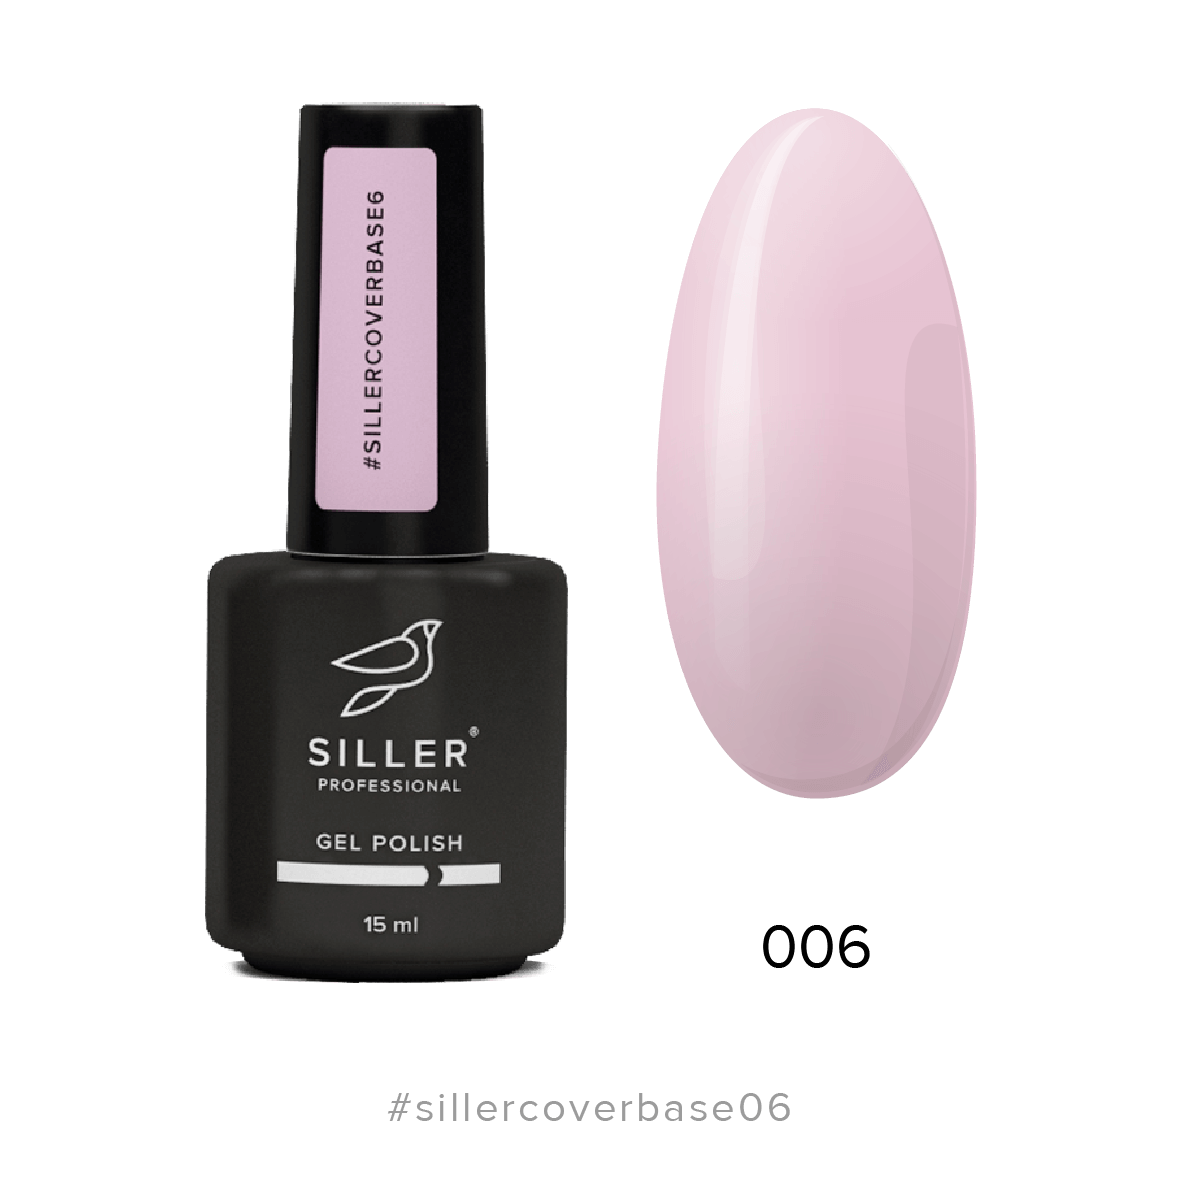 Siller Cover Base #6 - Light Pink